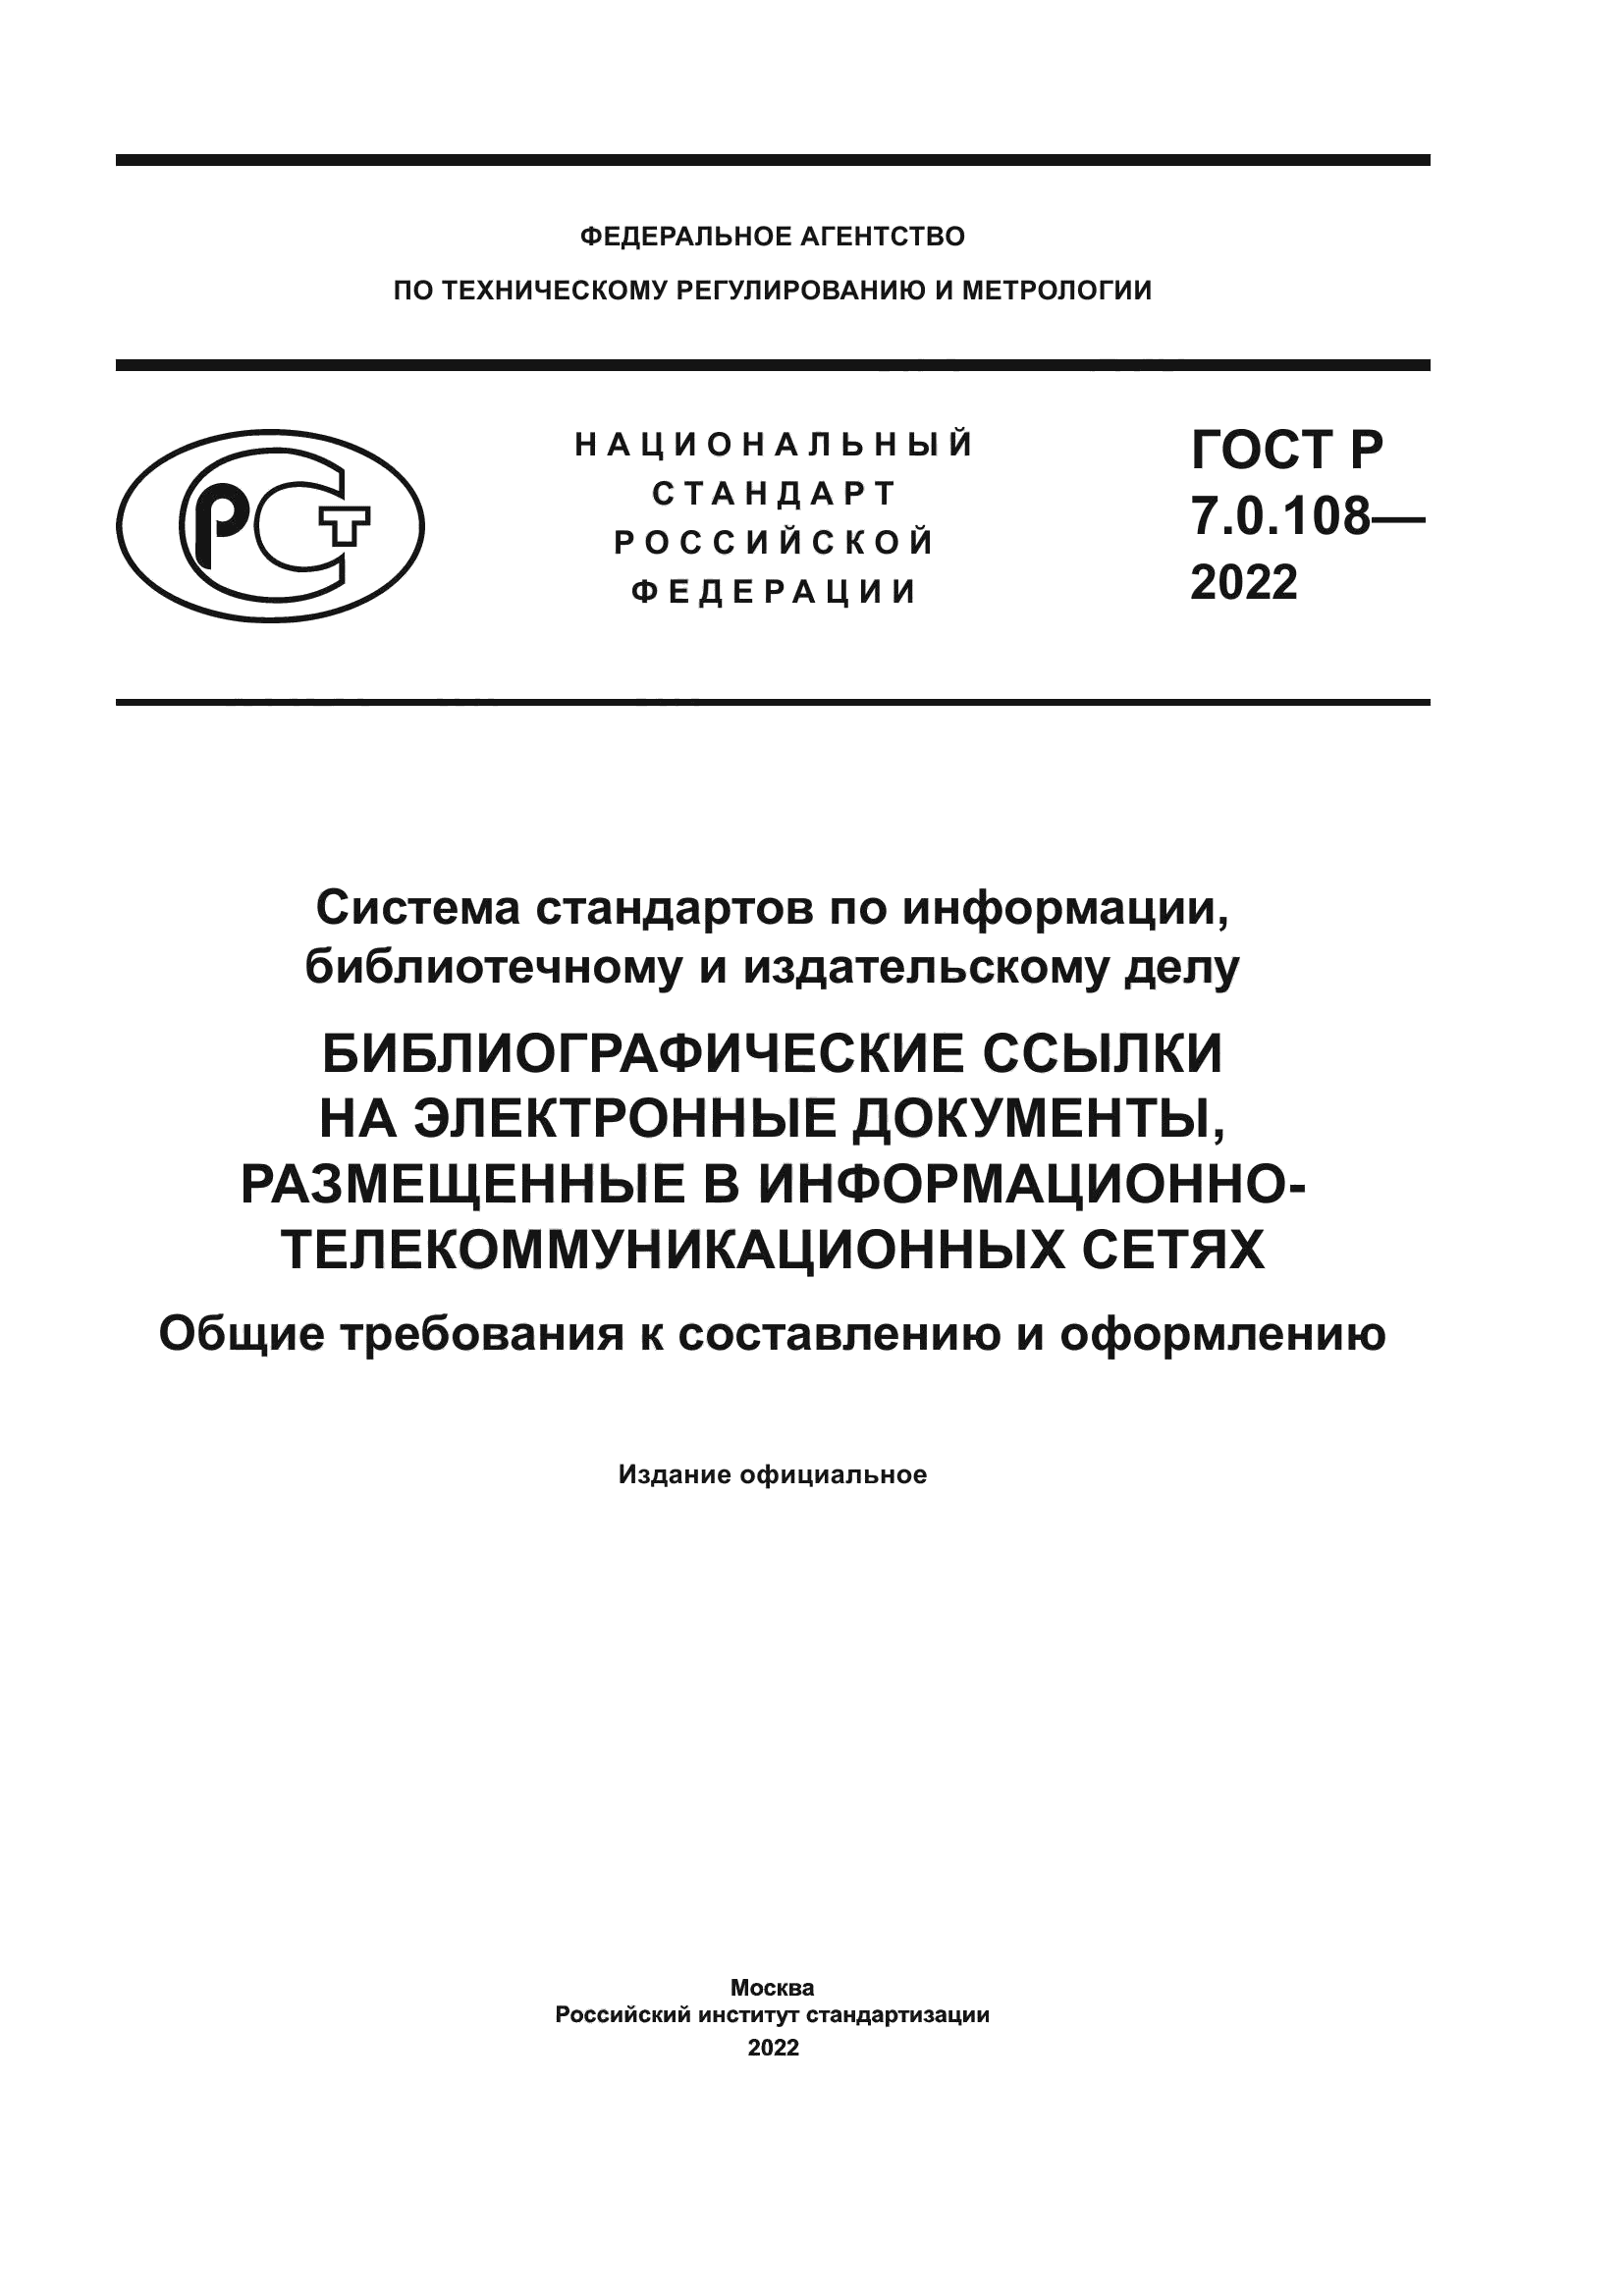 ГОСТ Р 7.0.108-2022